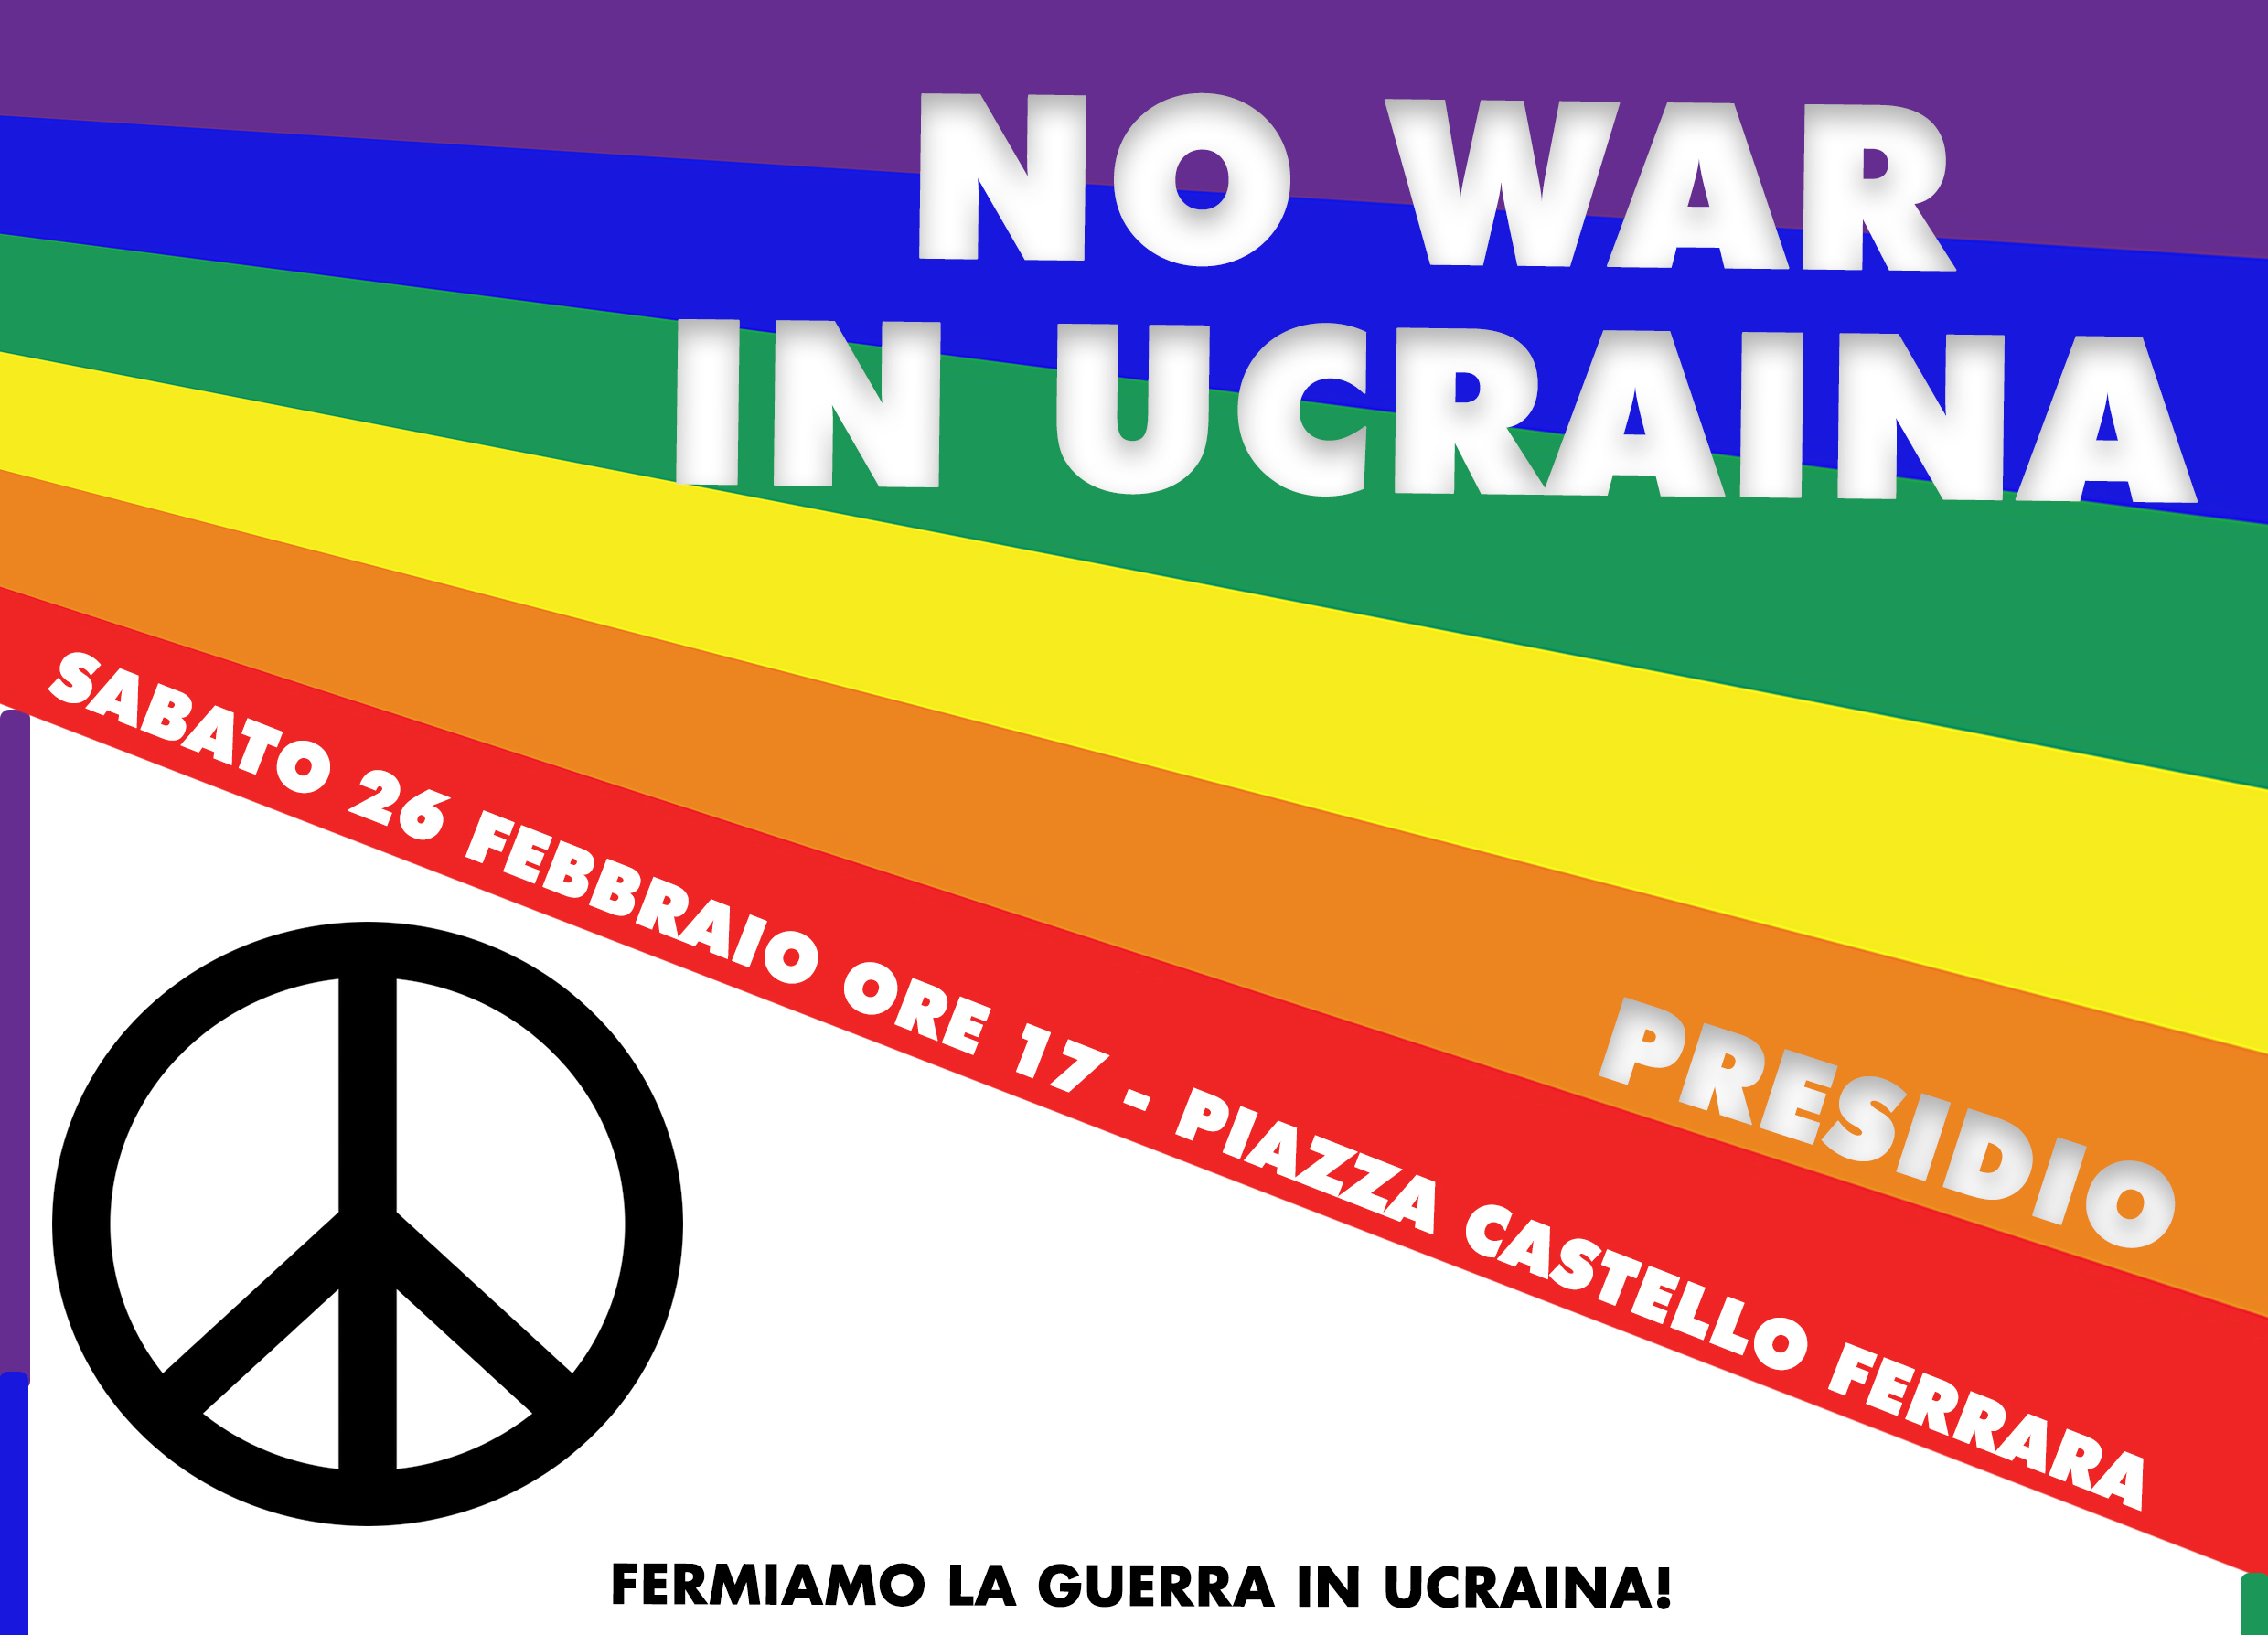 Fermiamo la guerra in Ucraina: presidio a Ferrara sabato 26 febbraio